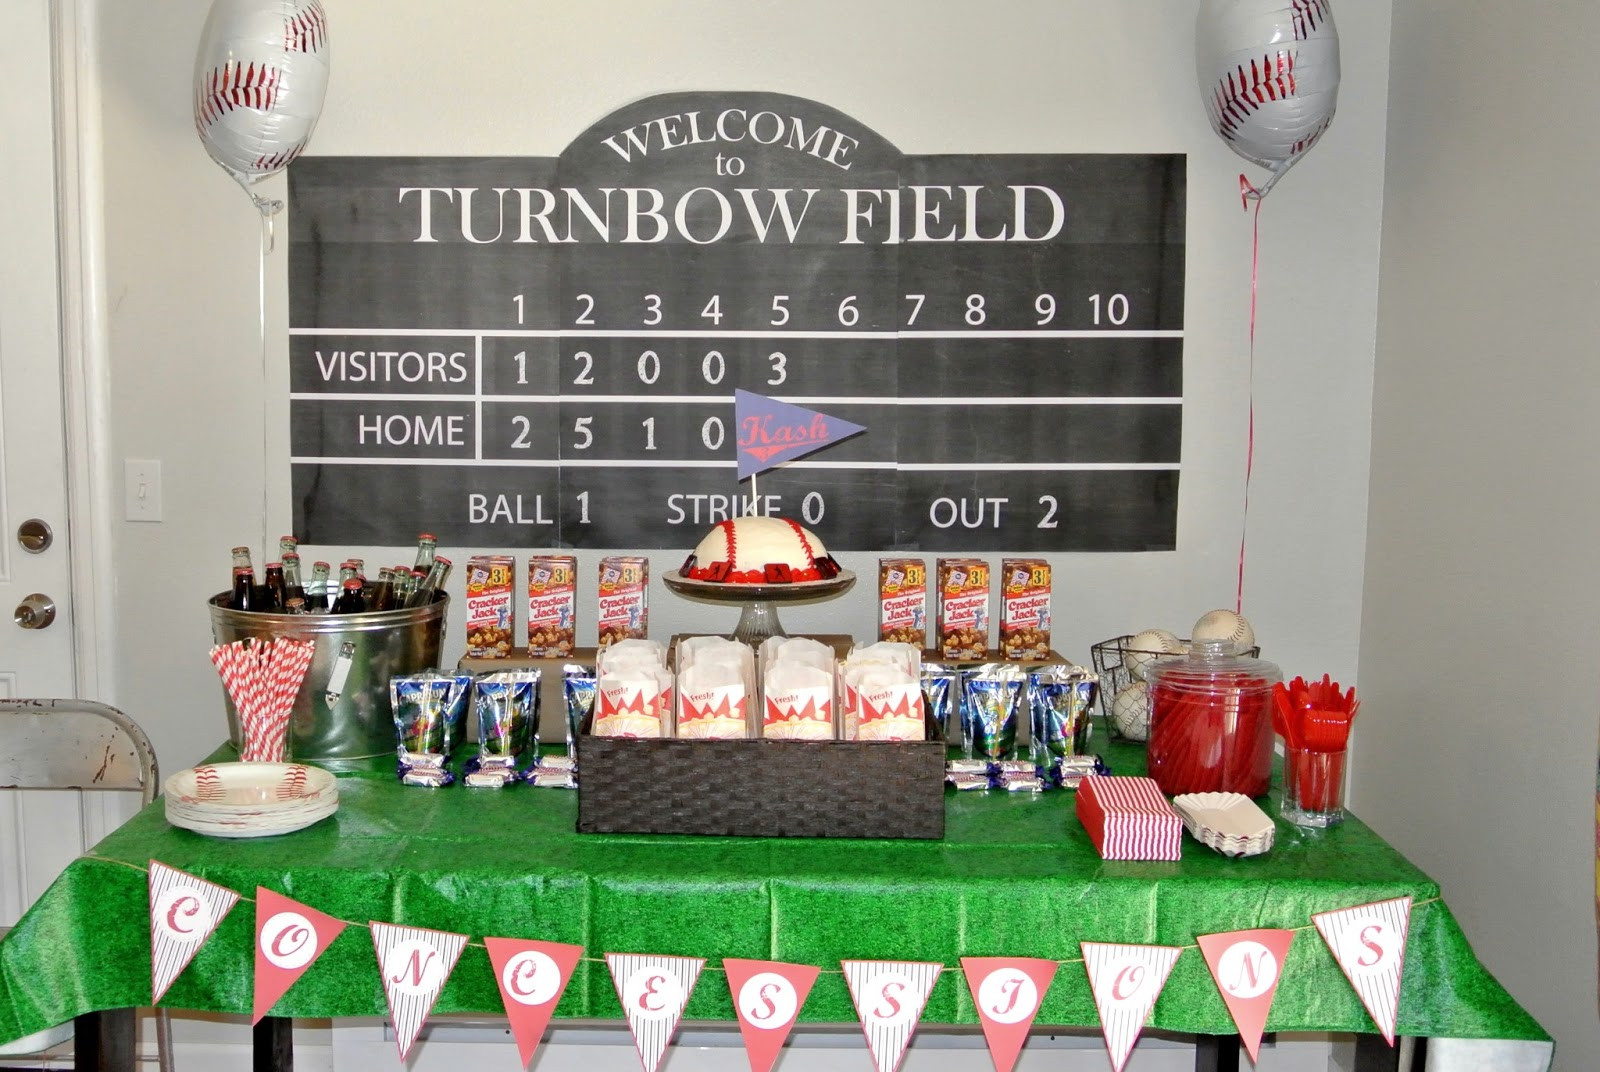 Baseball Themed Birthday Party Ideas
 Team Turnbow baseball themed party